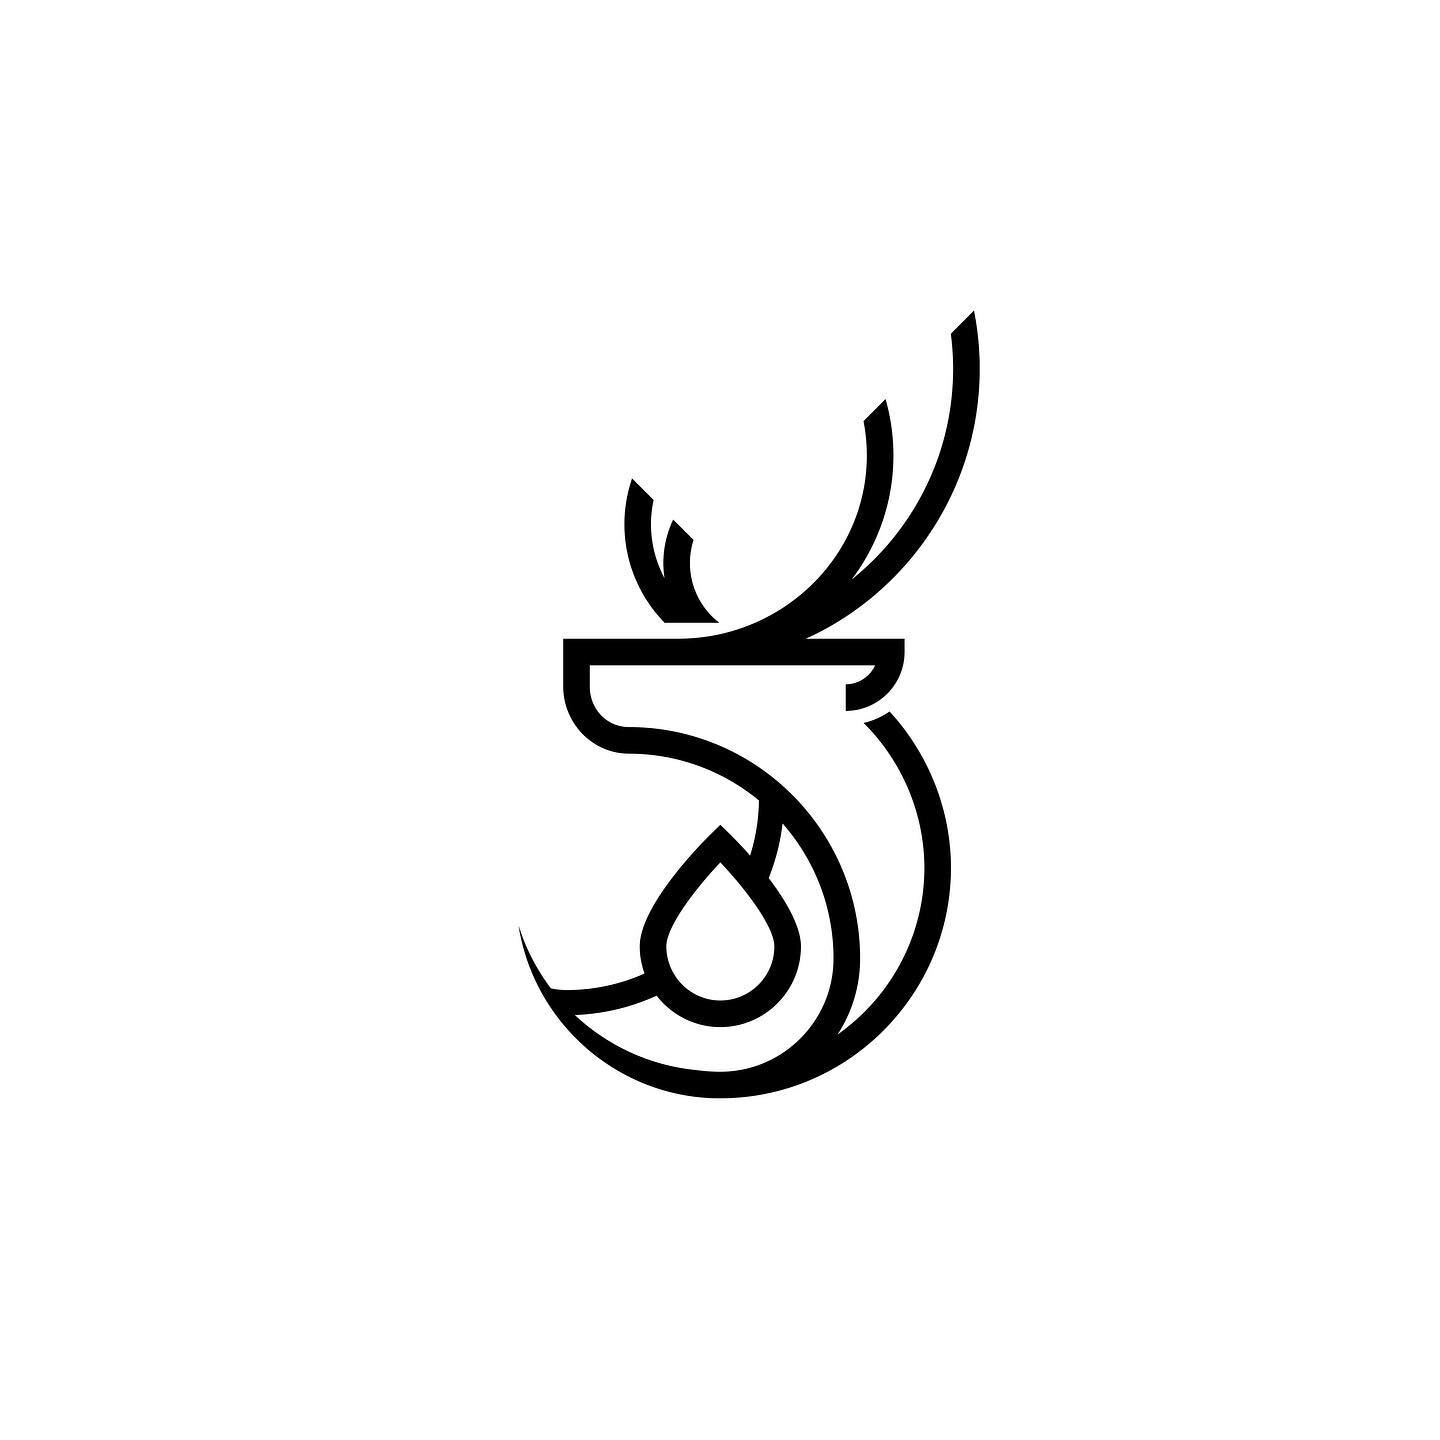 Identit&eacute; visuelle - Commune de Vionnaz, Valais

#logo #logotype #logodesigns #corporateidentity #corporateidentity #graphicdesign #logoinspirations #deer #switzerland #valais